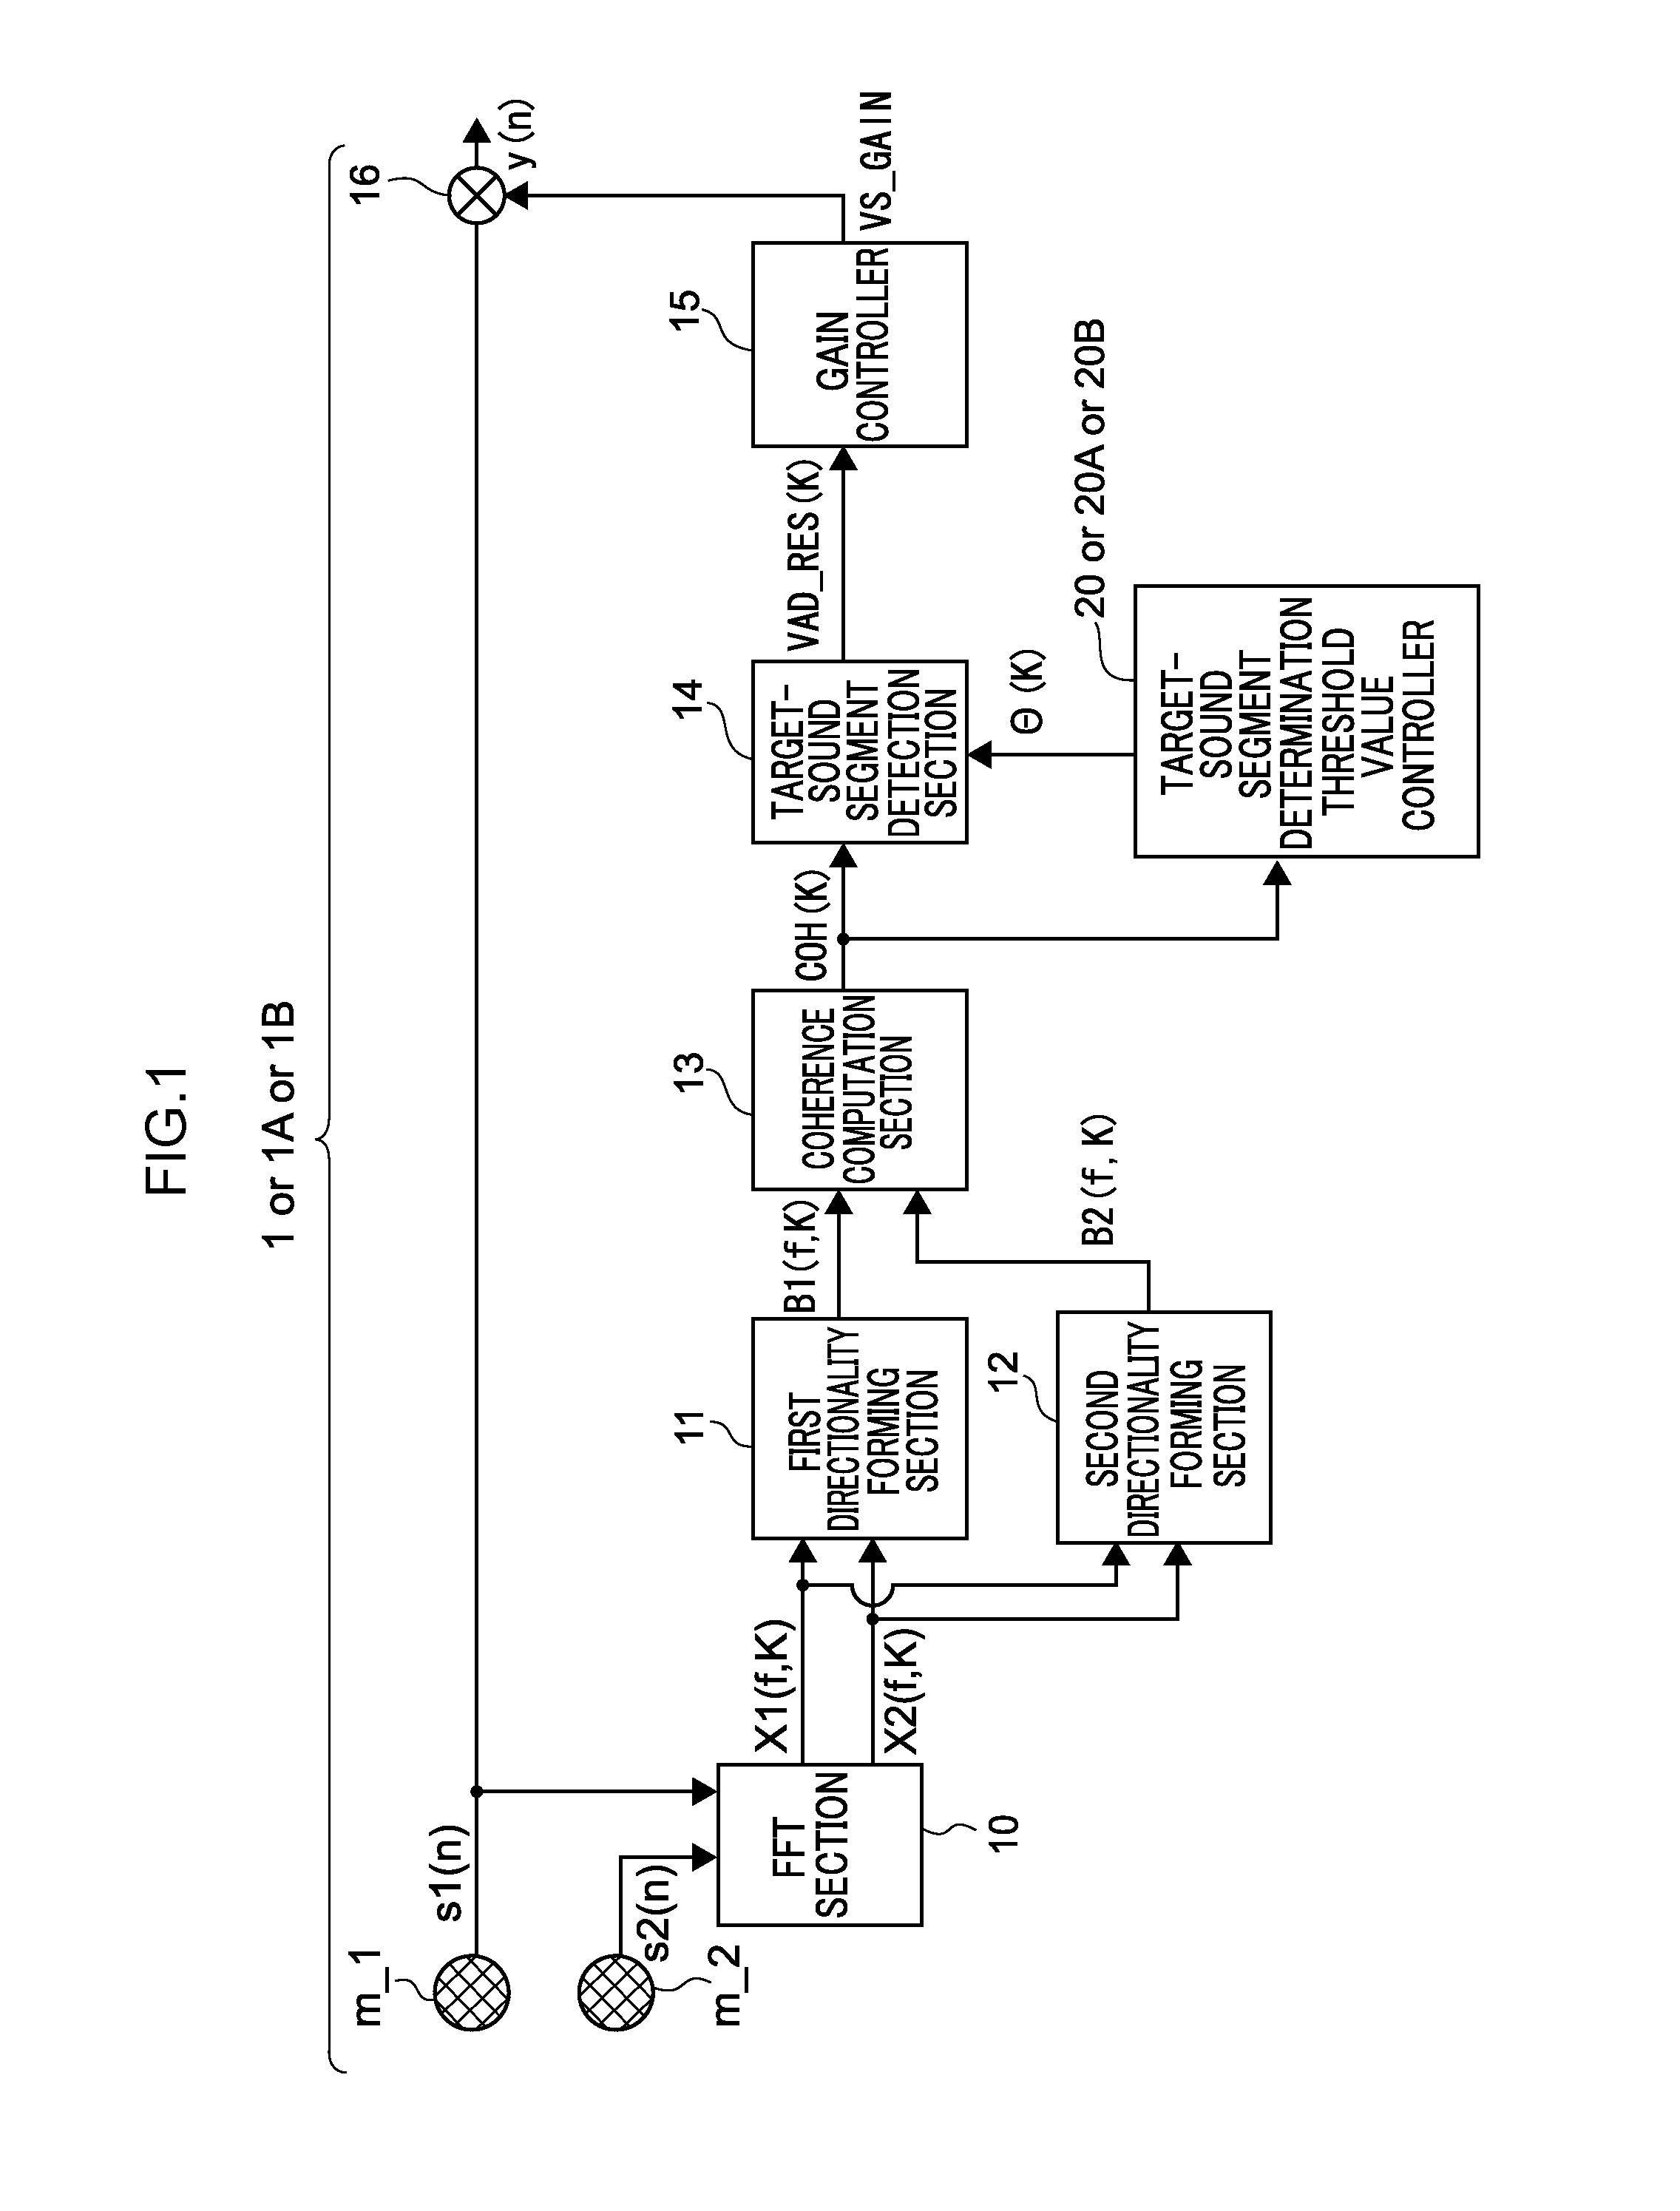 Audio signal processor, method, and program